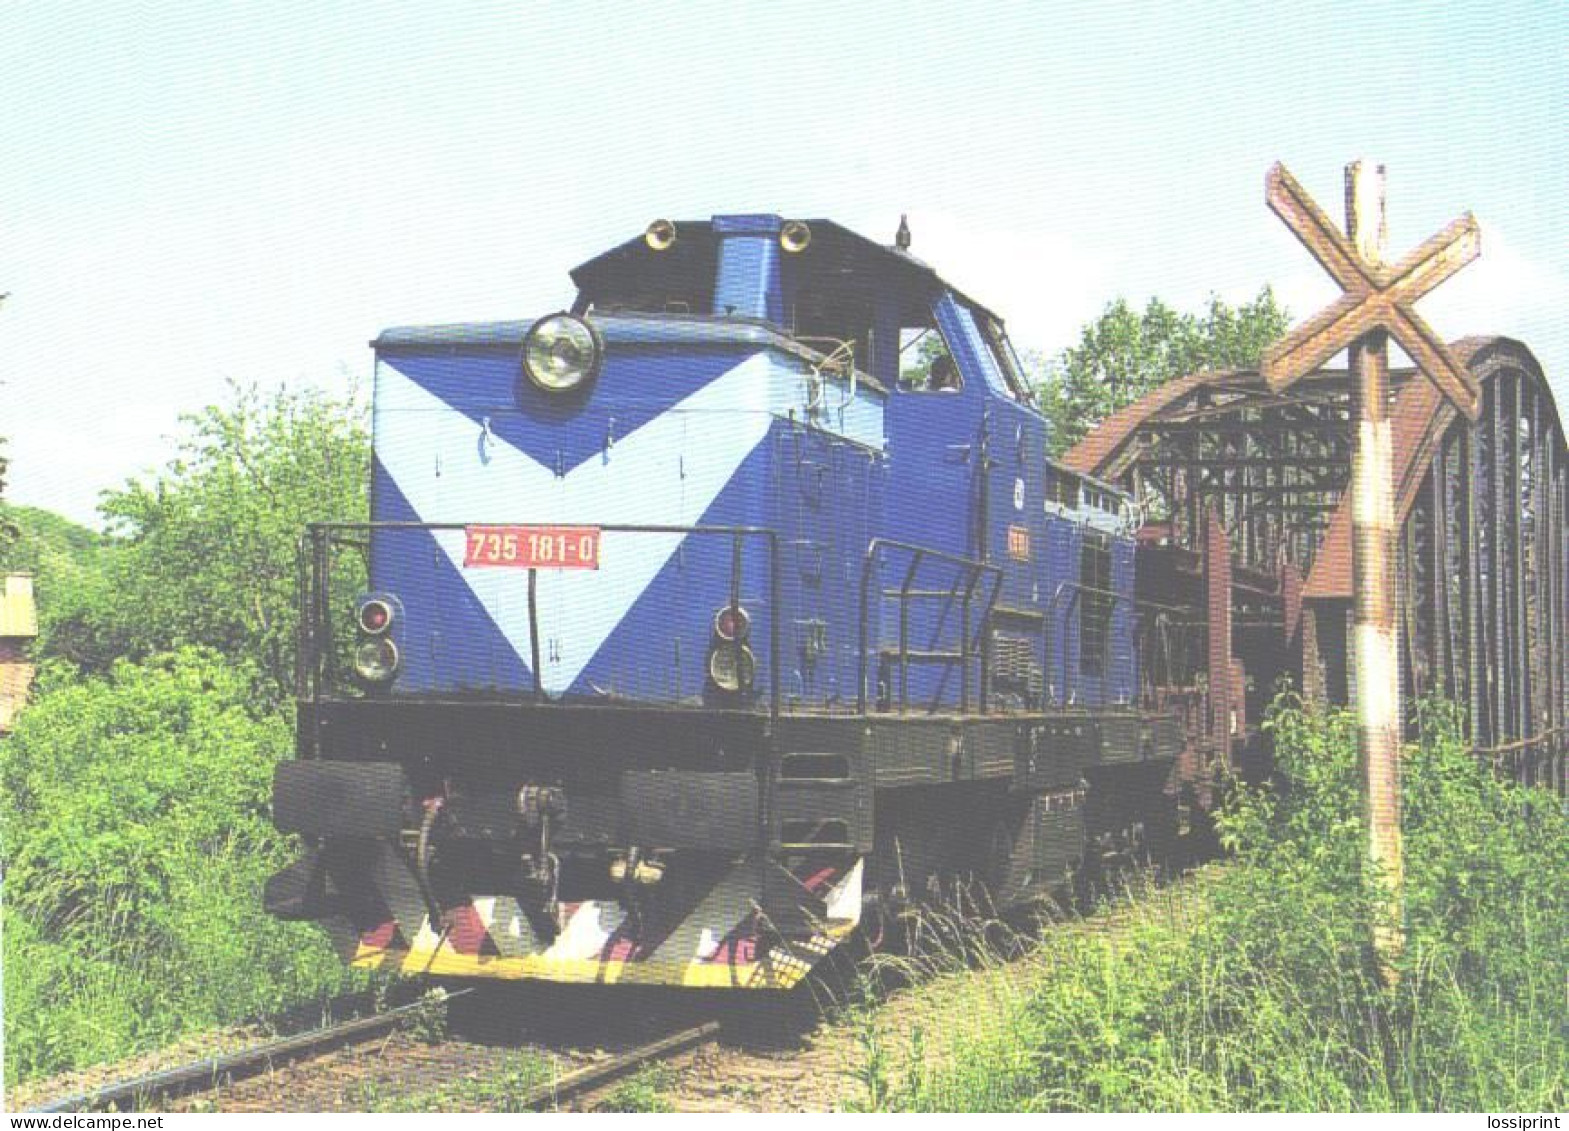 Train, Railway, Locomotive 735 181-0 - Trains